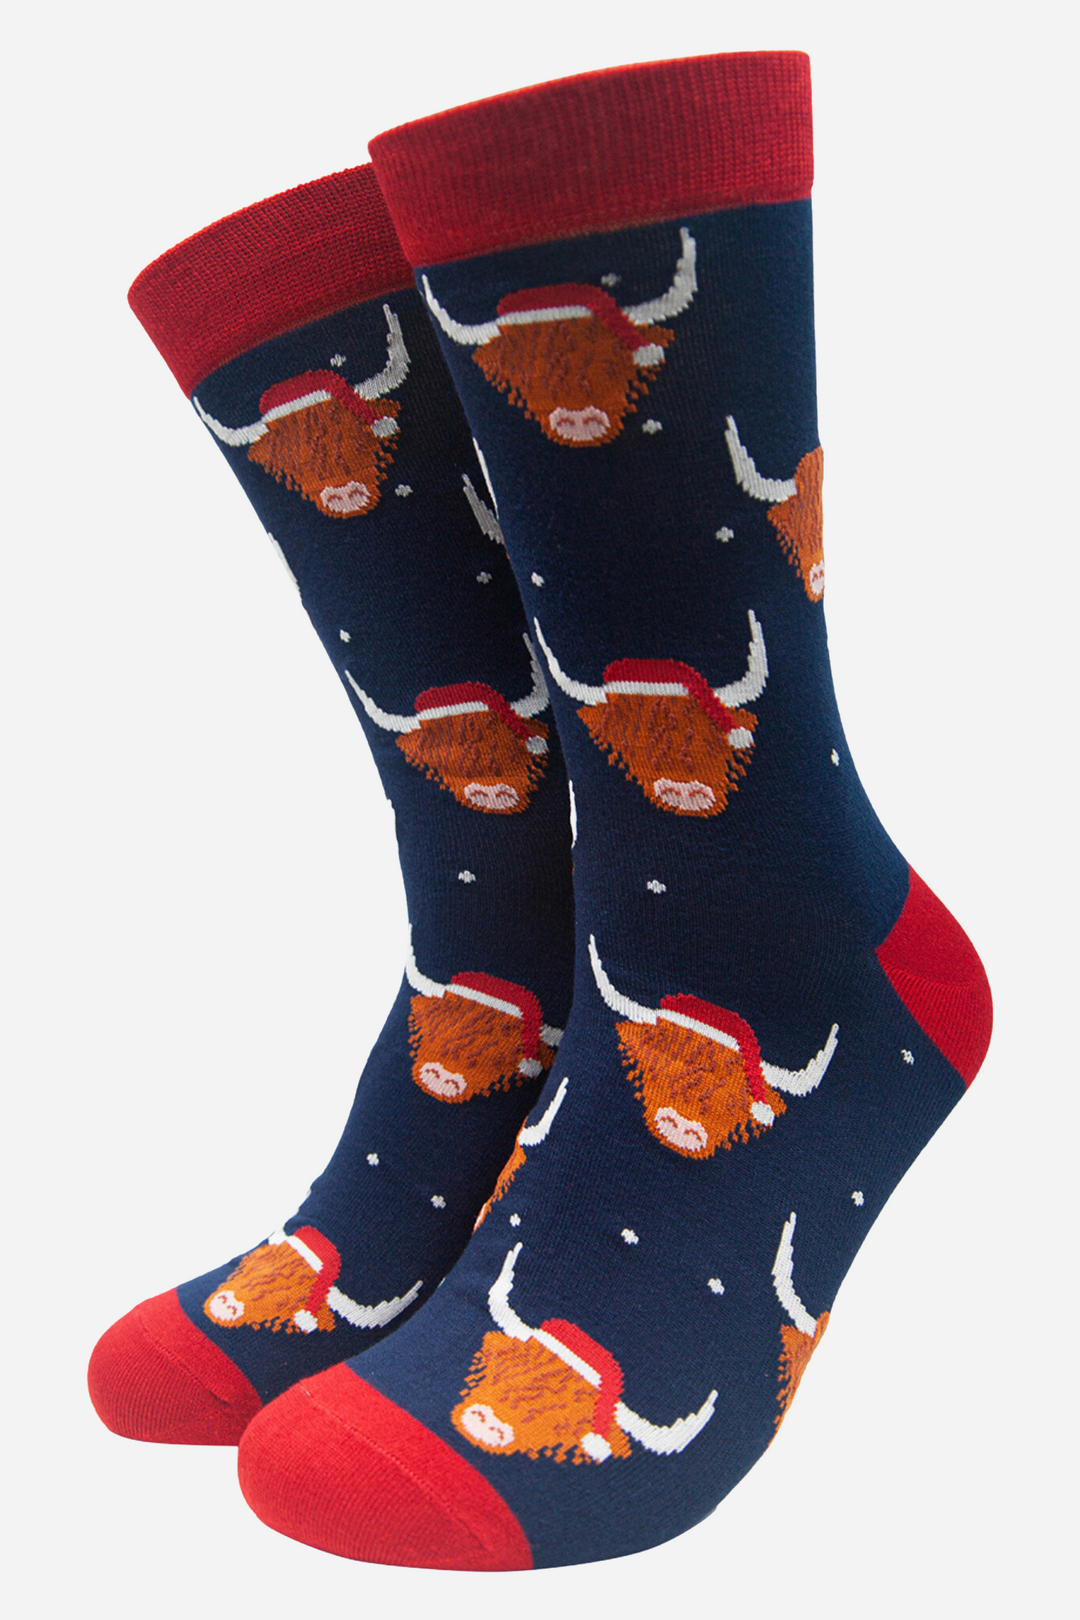 navy blue socks featuring highland cows wearing santa hats